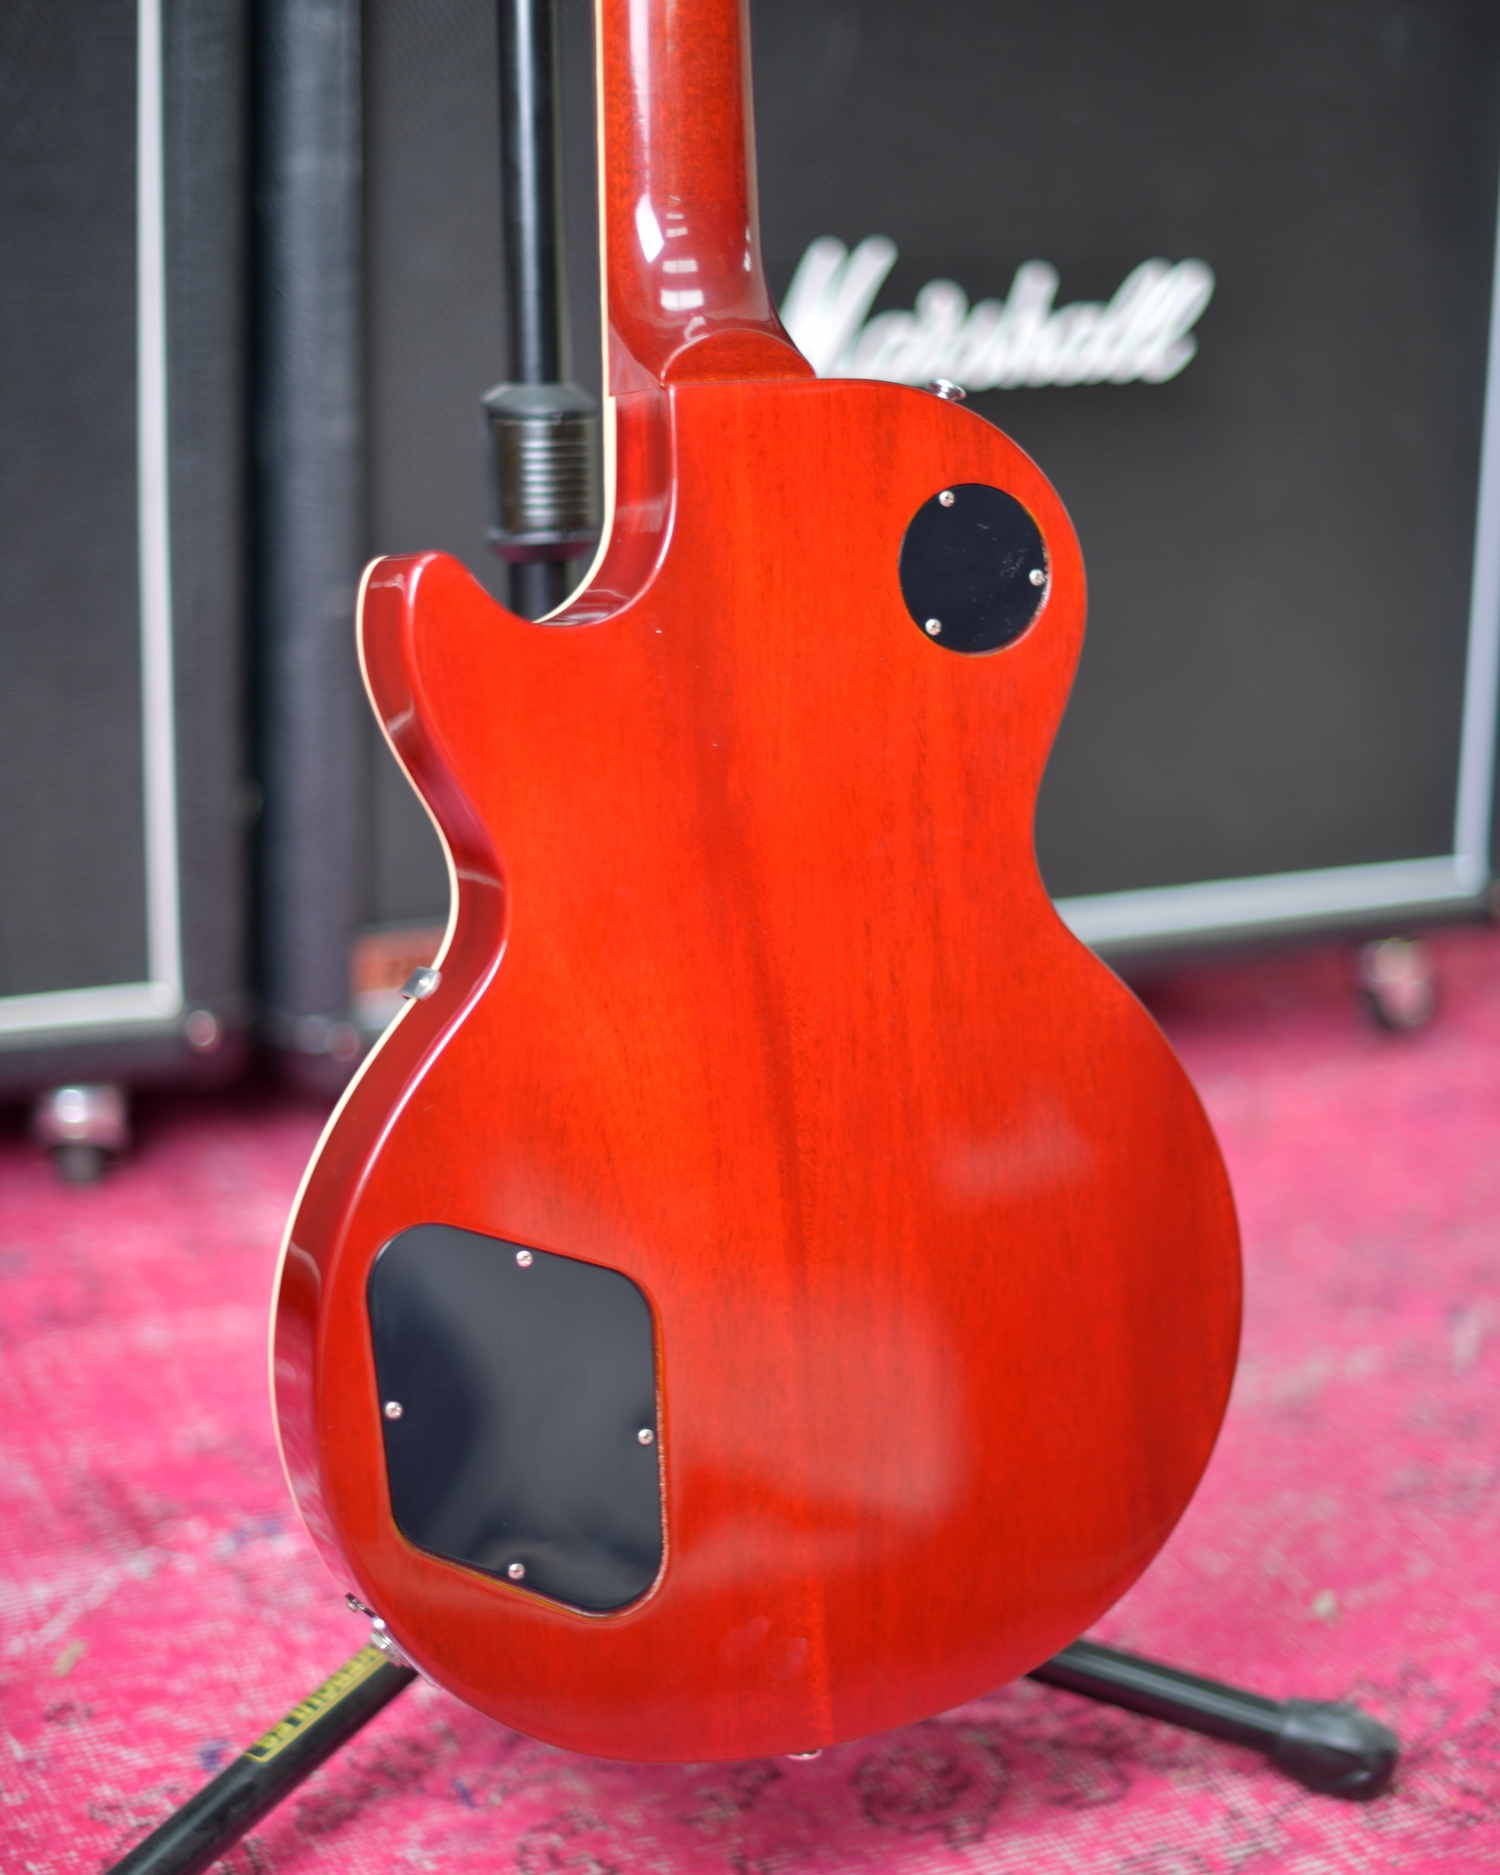 Gibson Les Paul Standard Plus Cherry Sunburst 2013